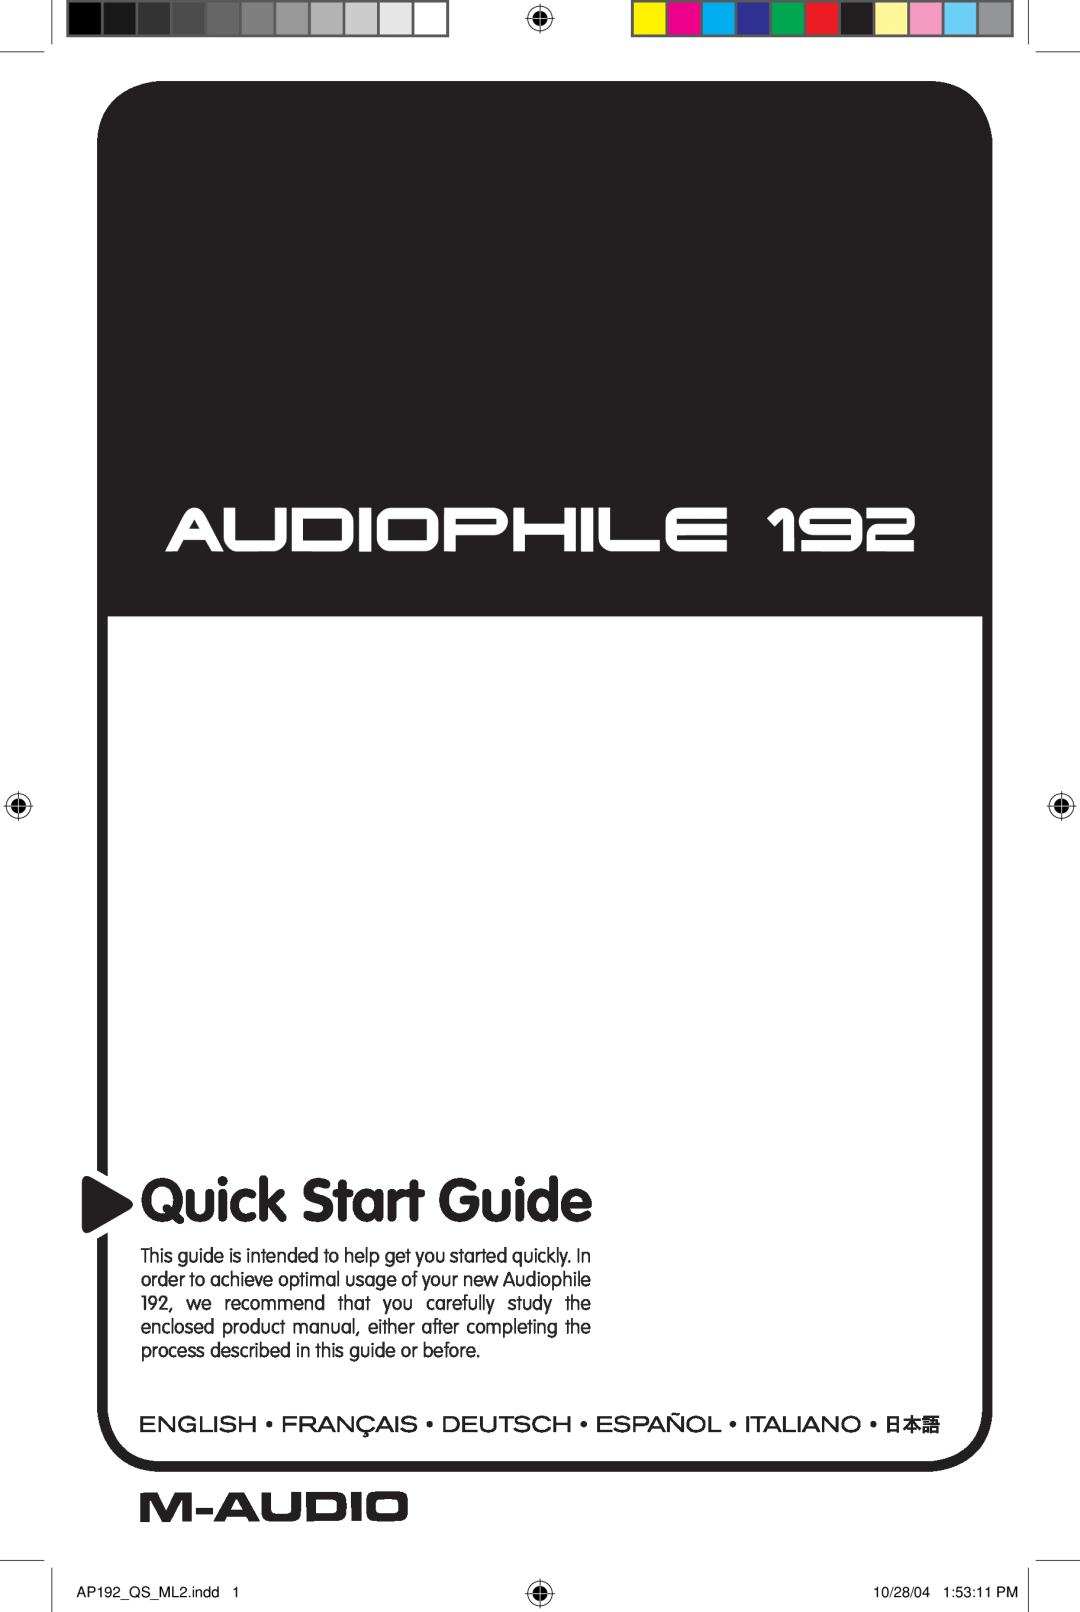 M-Audio 192s quick start Audiophile, Quick Start Guide 